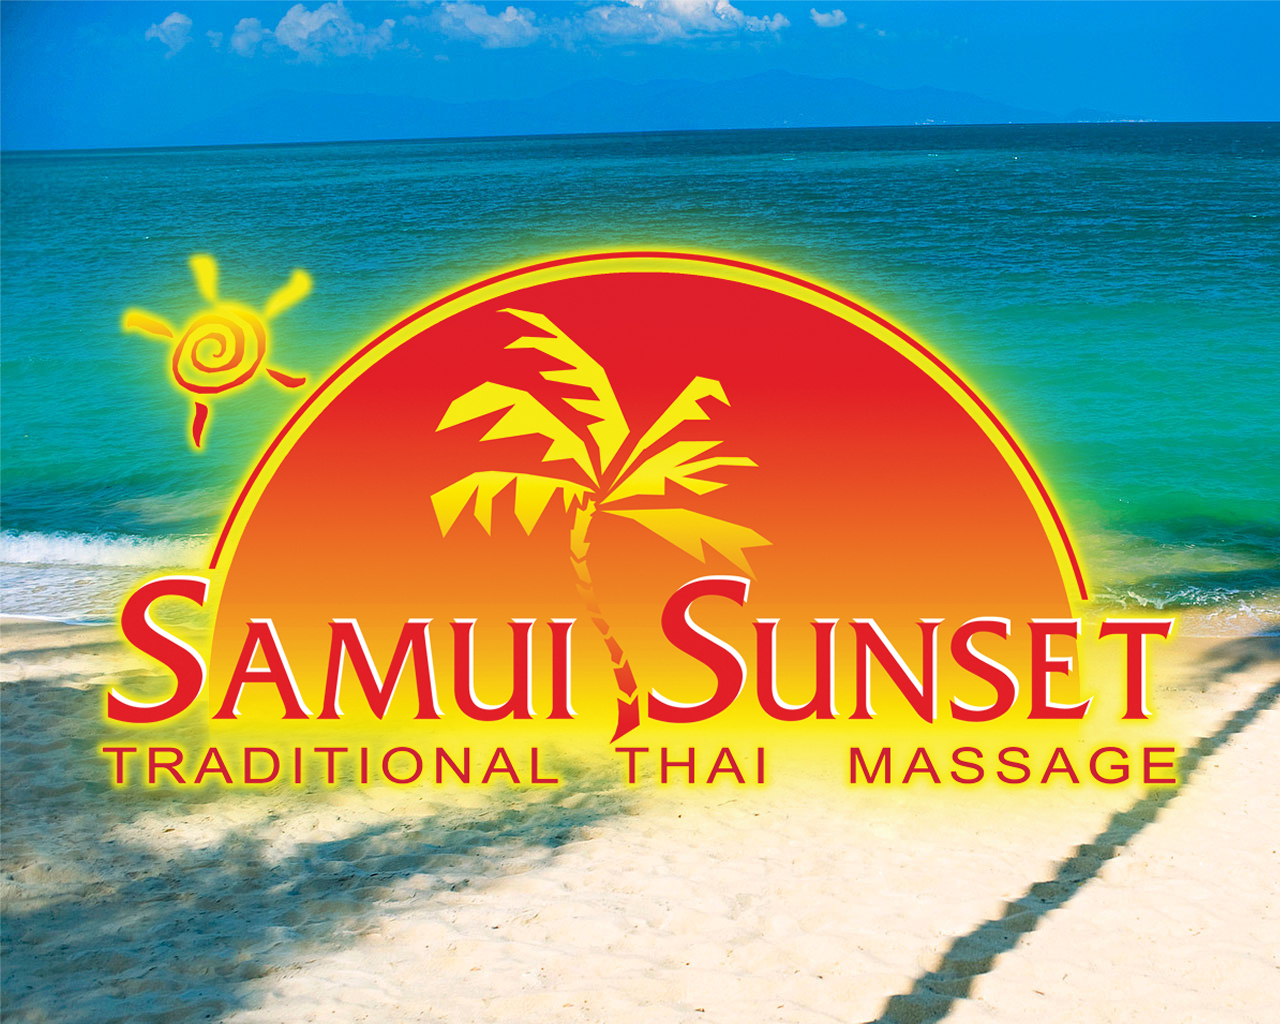 Samui Sunset Traditional Thai Massage